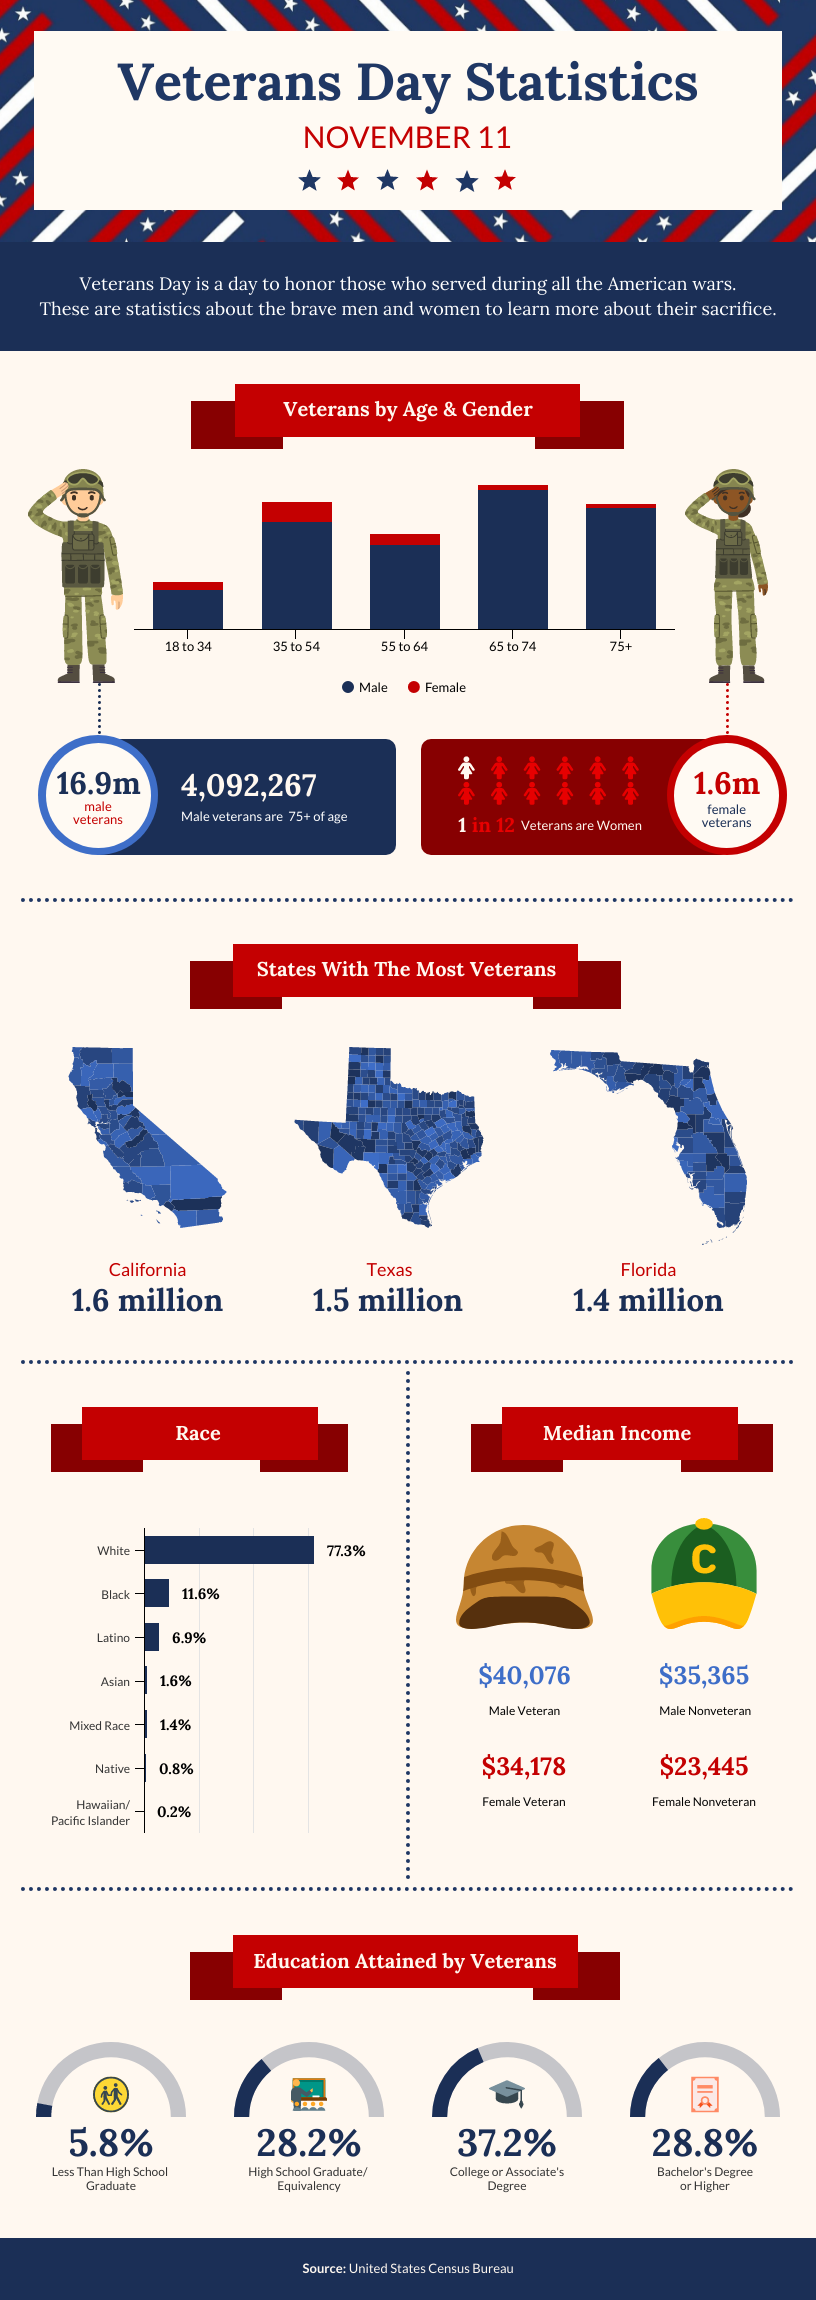 Veterans Dat Statistics Infographic